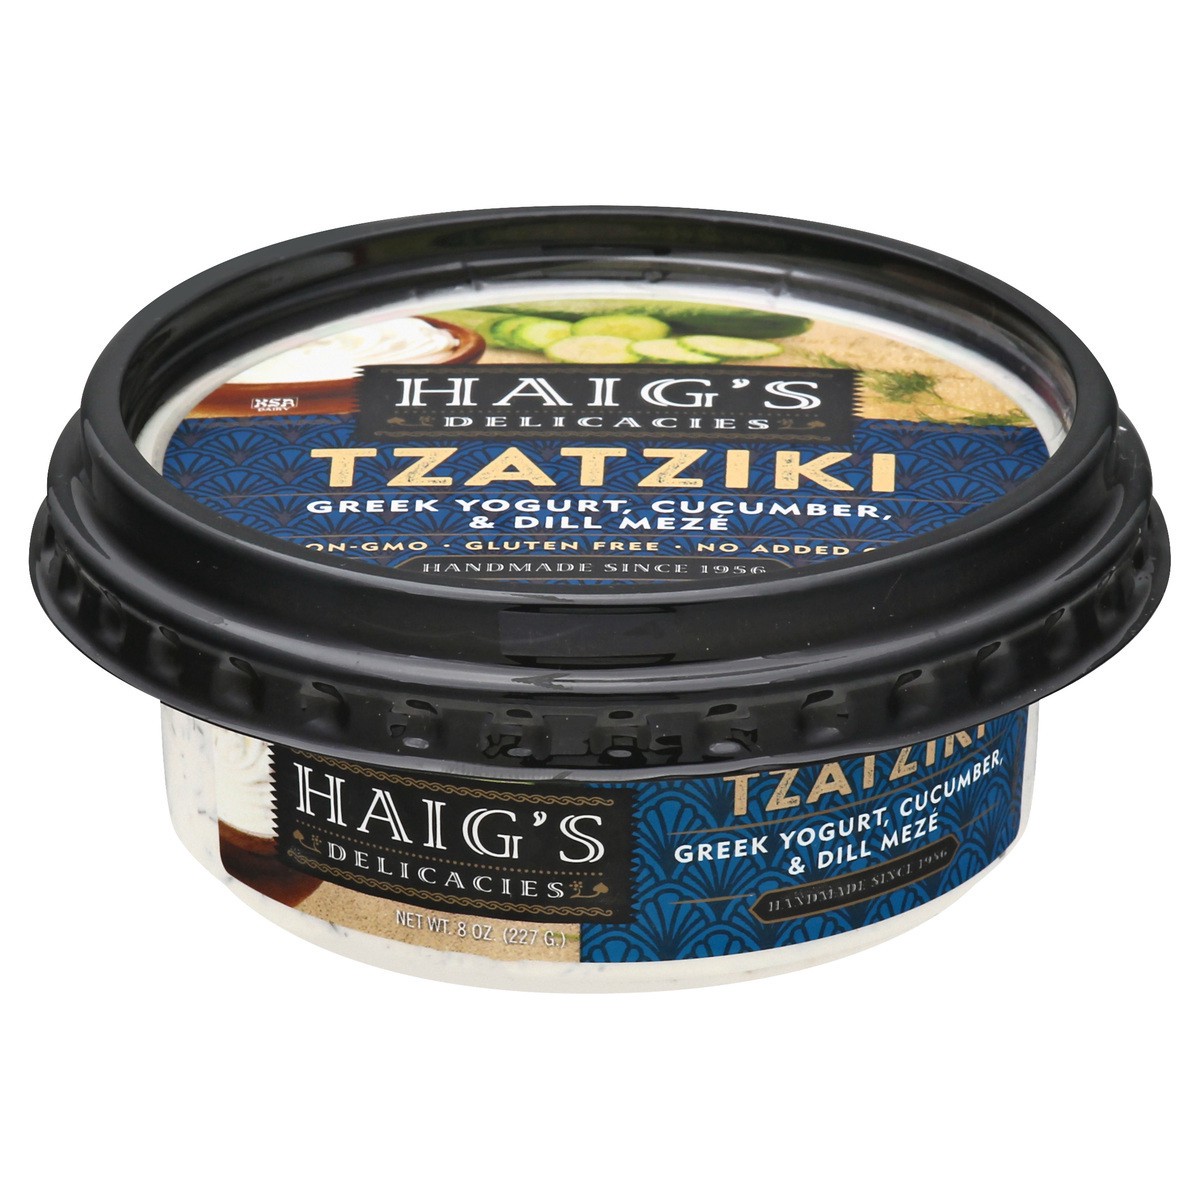 slide 1 of 9, Haig's Greek Yogurt, Cucumber, & Dill Meze Tzatziki 8 oz, 8 oz